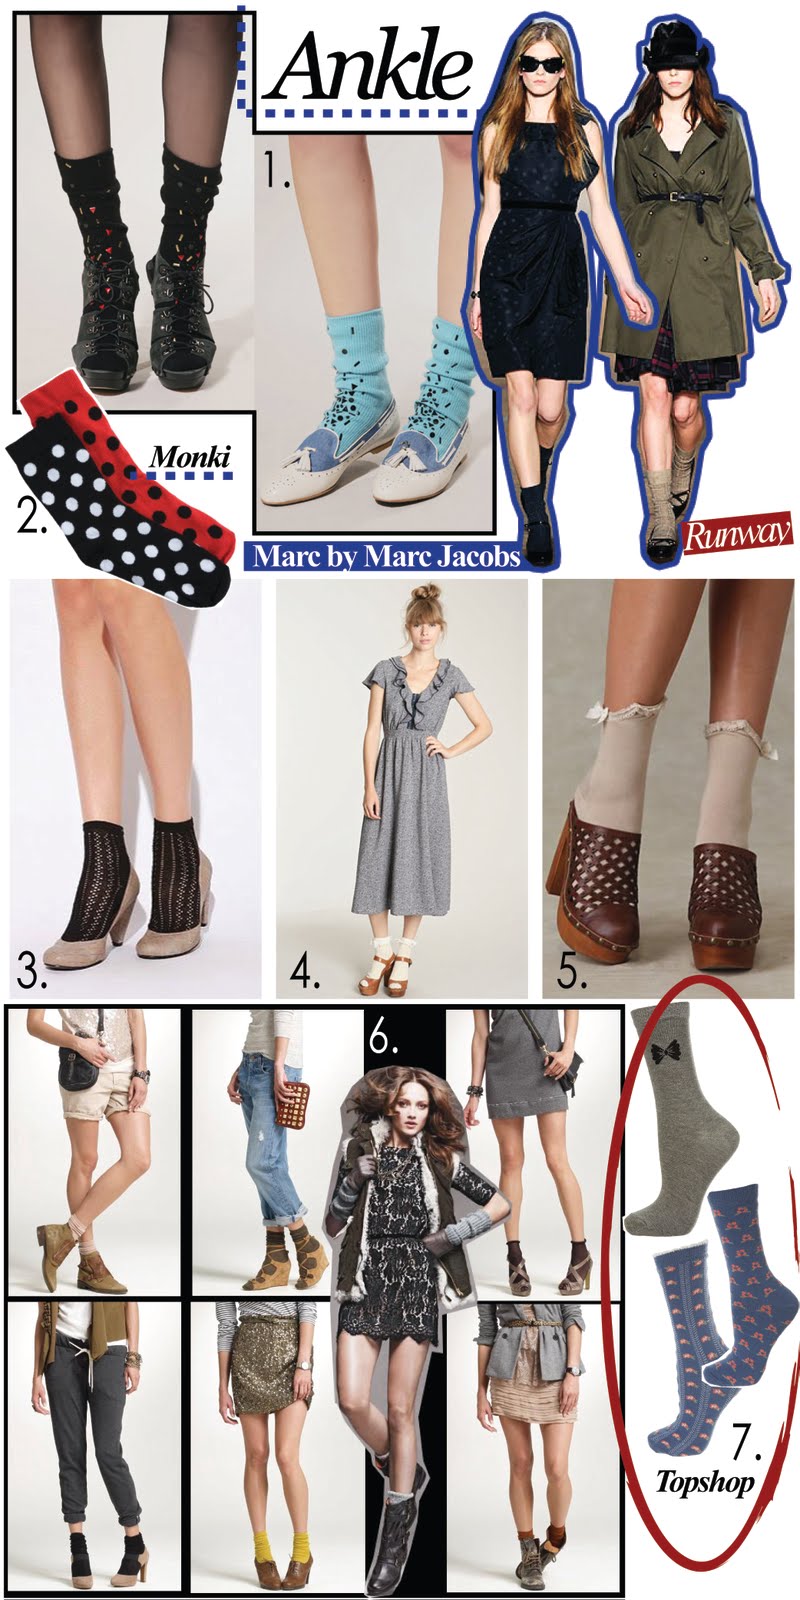 http://2.bp.blogspot.com/_m5u9mNBBNAc/TJo20sW3A4I/AAAAAAAAAig/xUR_W4_mv_M/s1600/ankle+socks.jpg